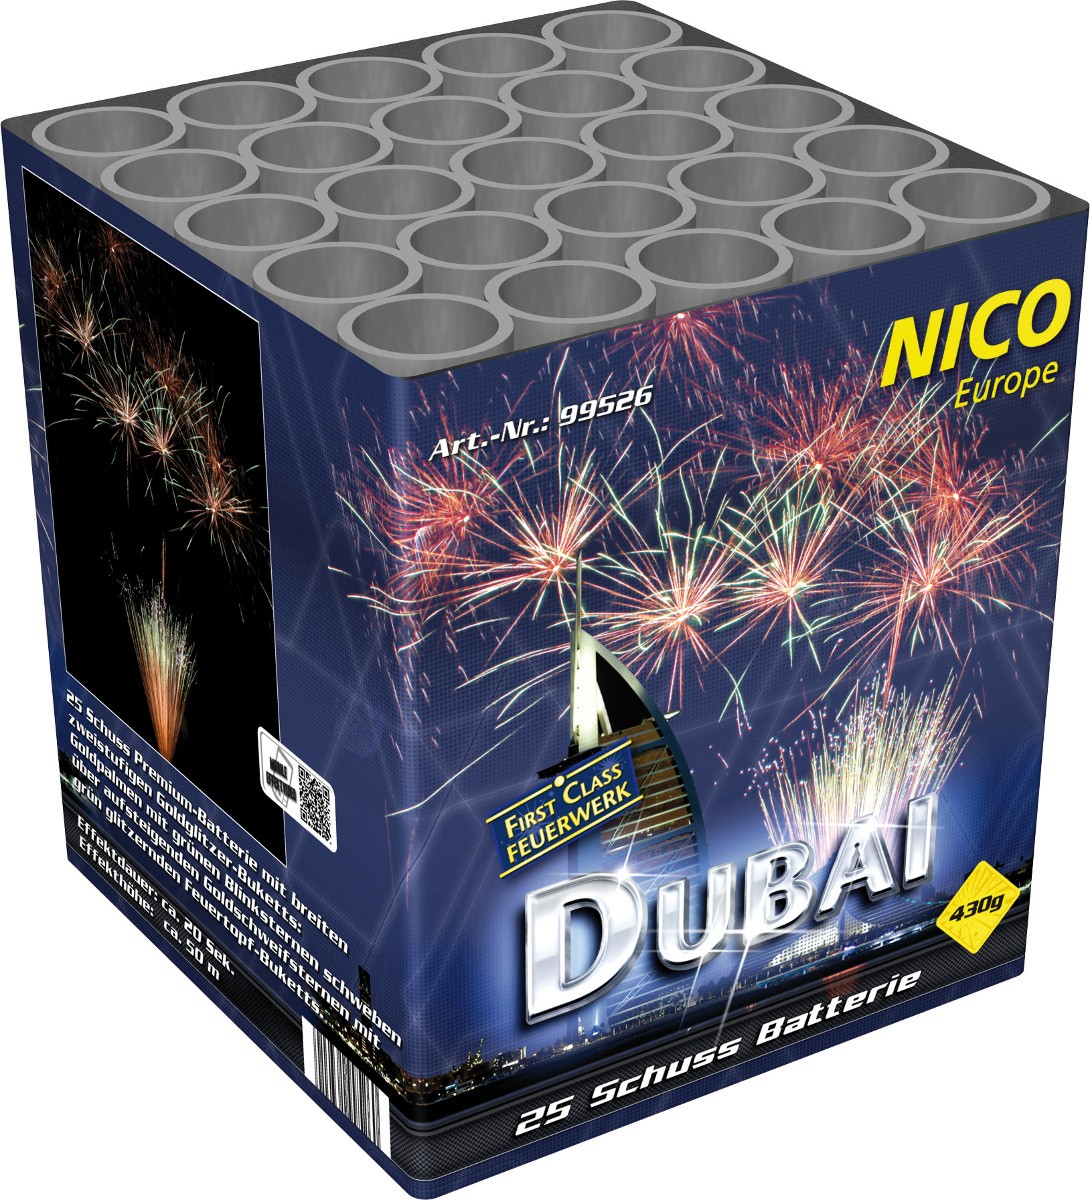 Batterie 25 Schuss Dubai Feuerwerk